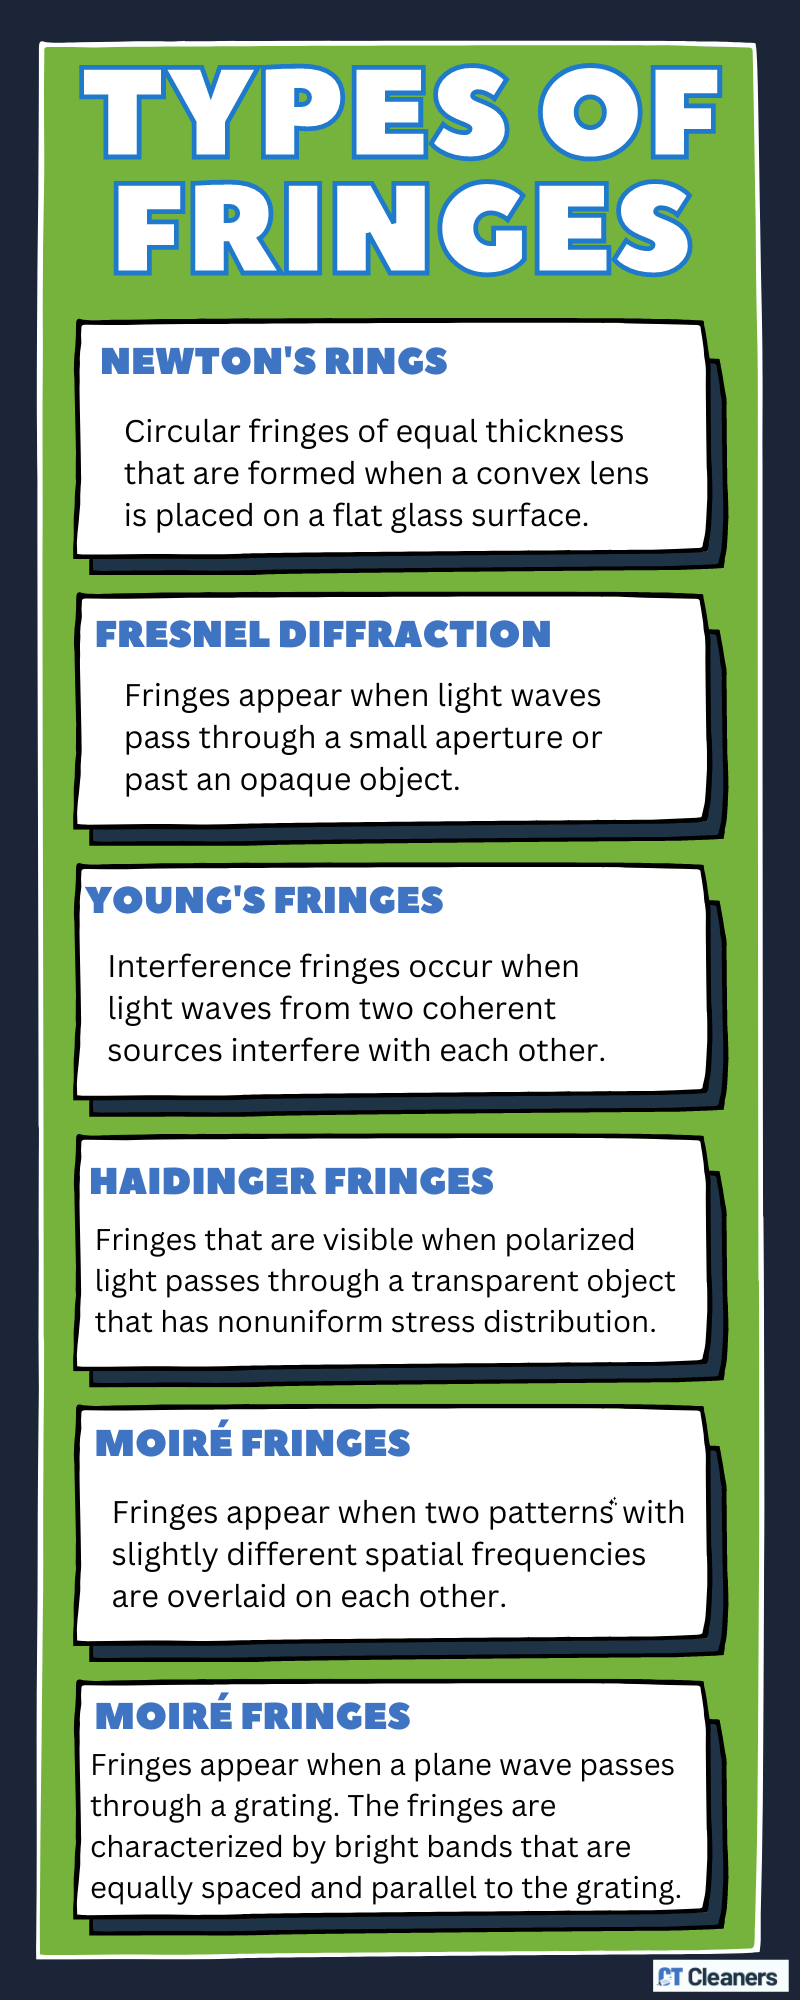 Types of Fringes